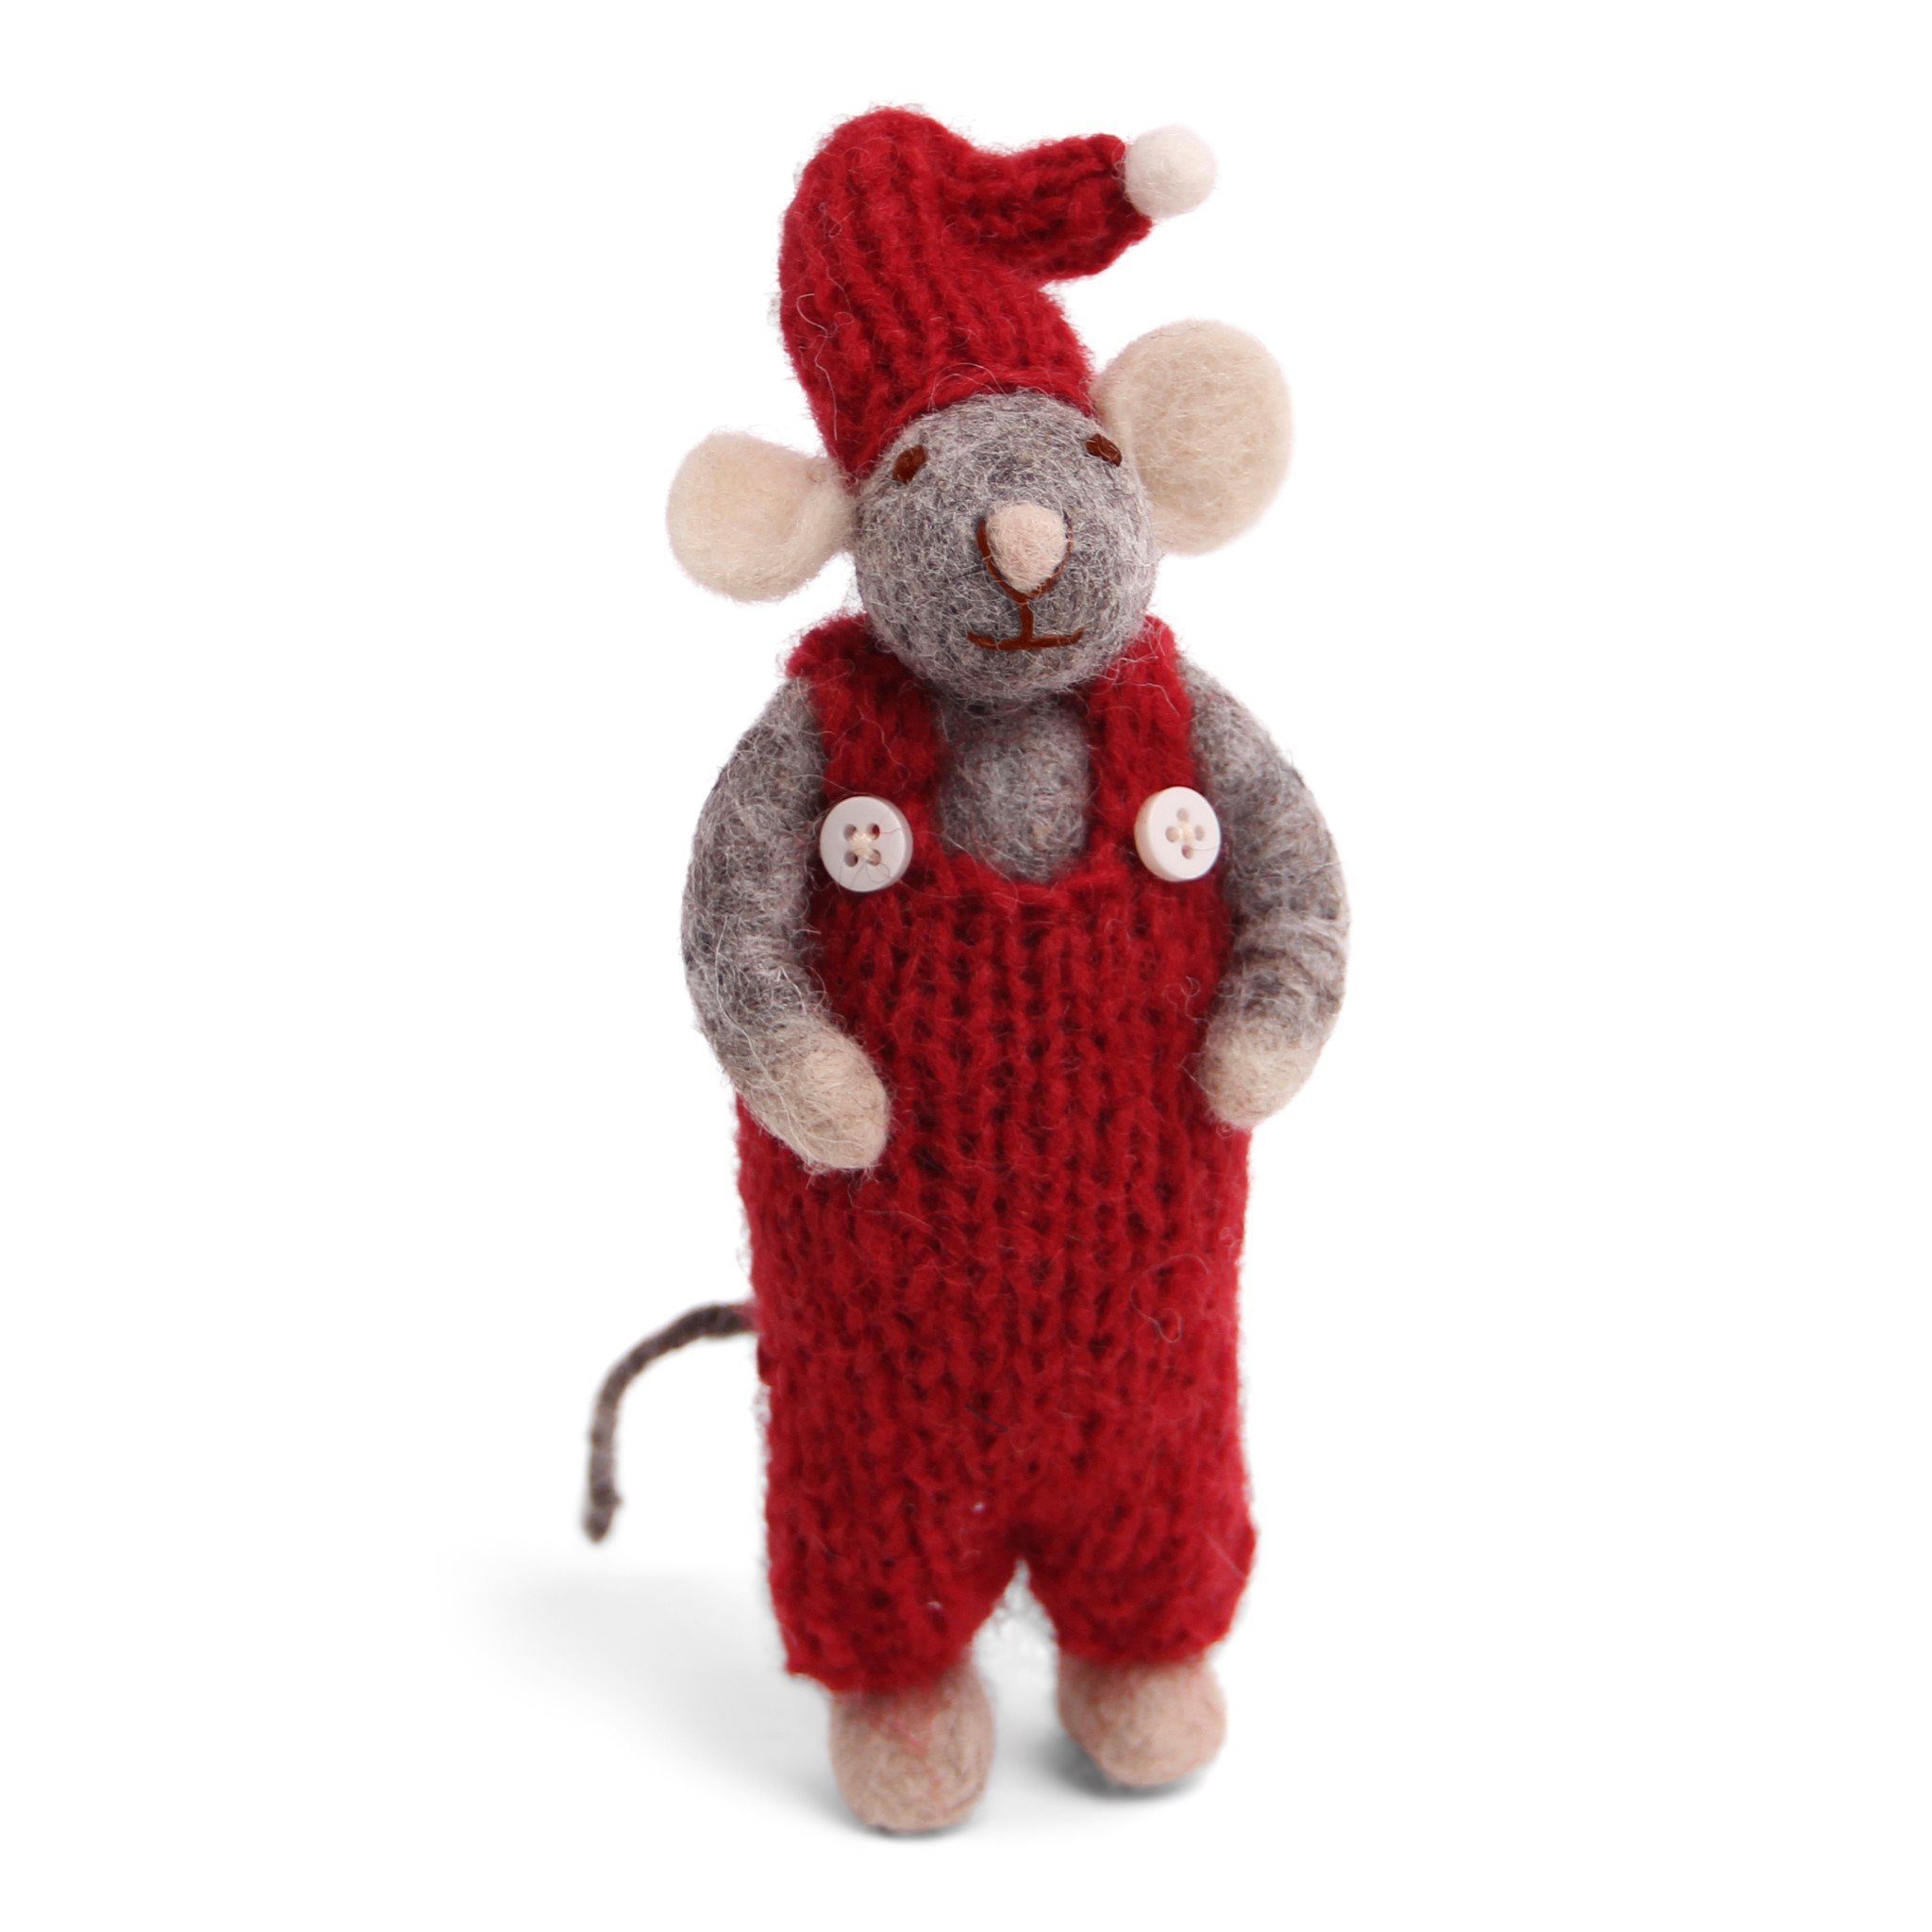 Filtet gr mus med rde bukser fra Gry & Sif, 14 cm